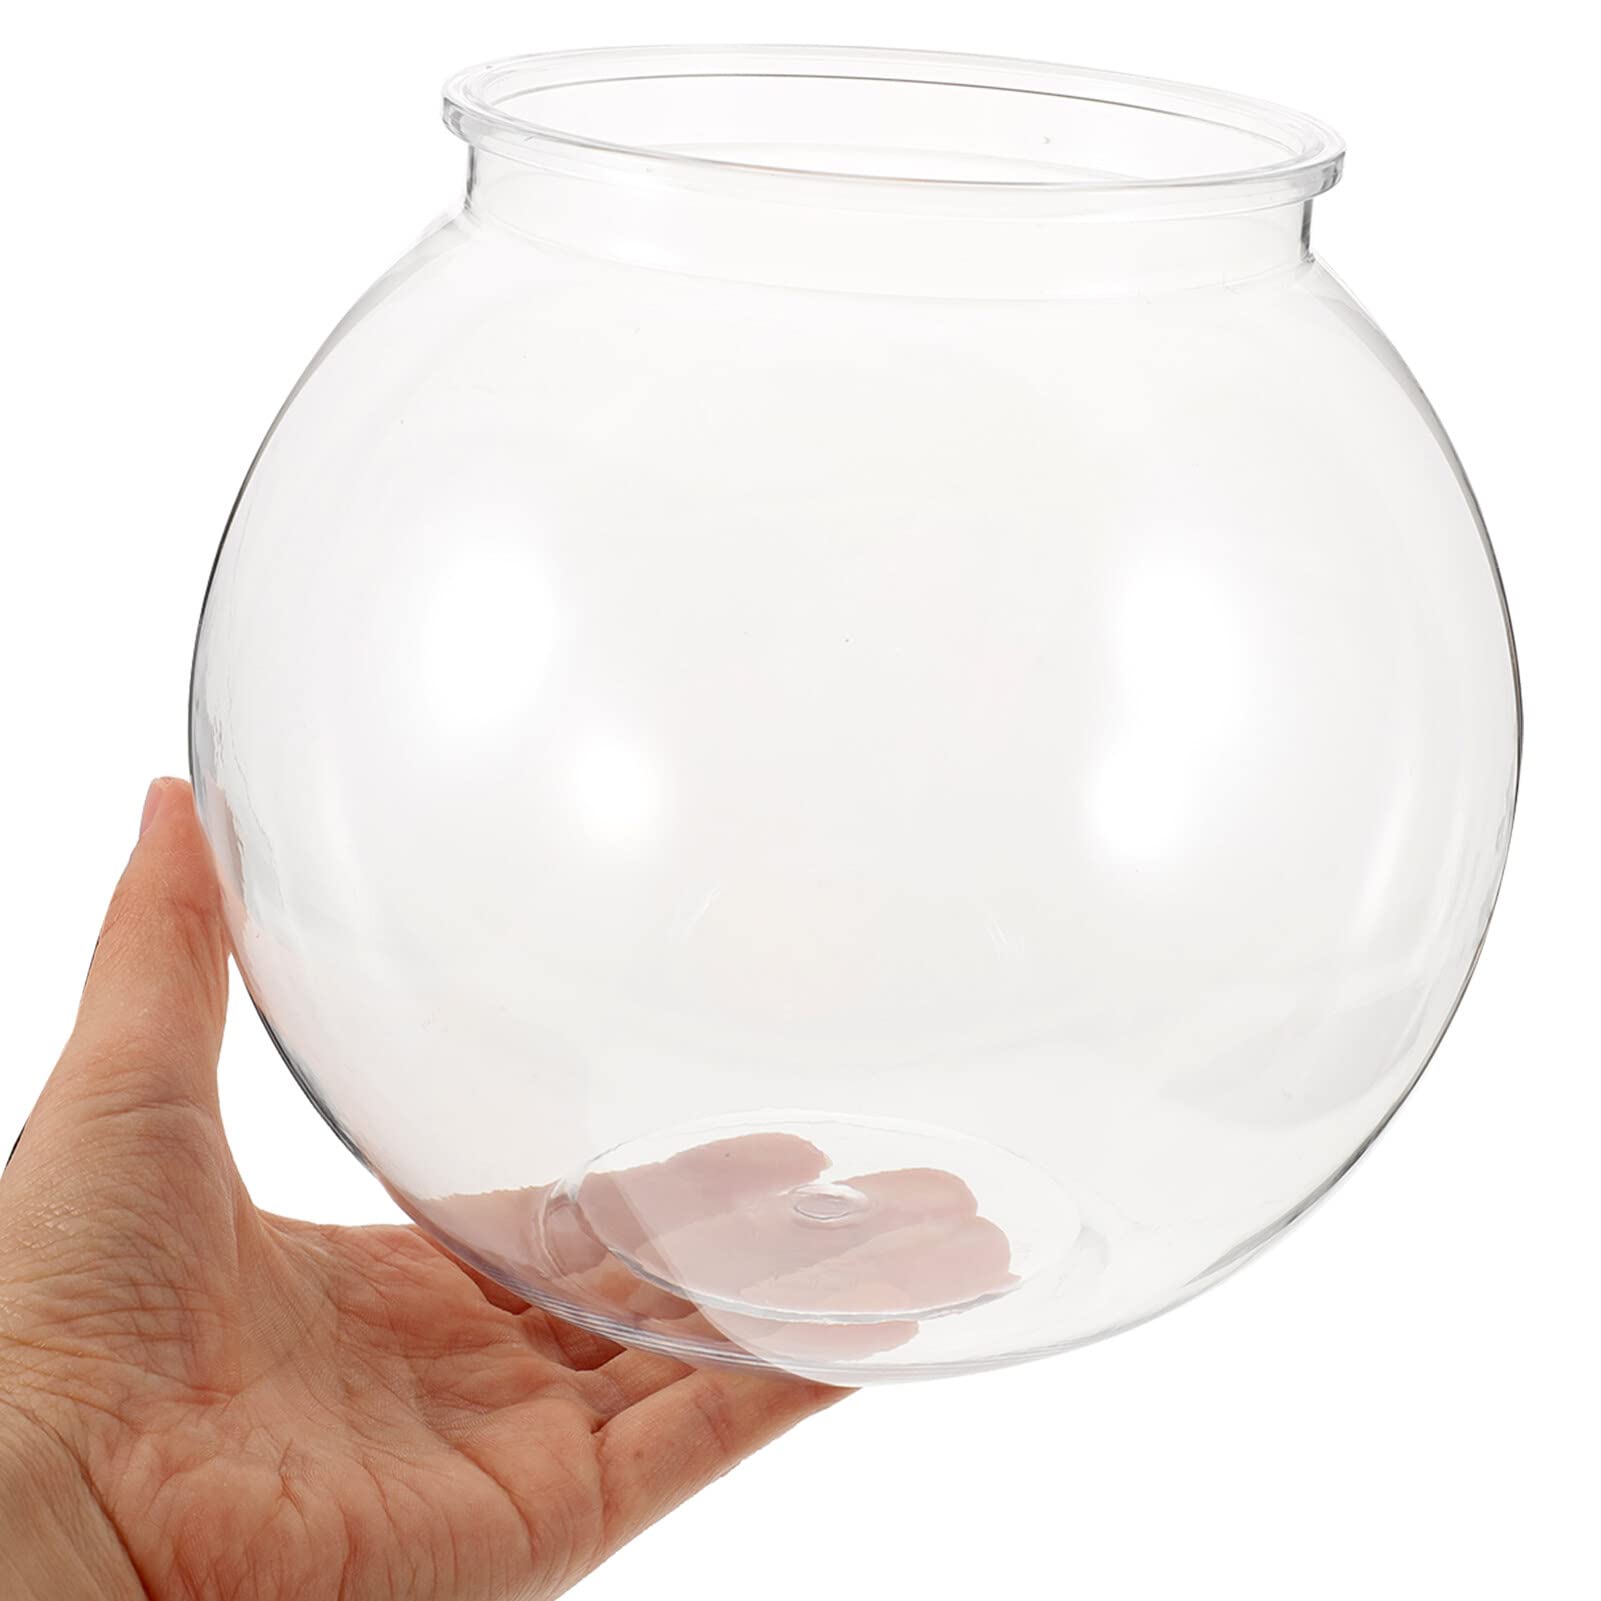 ULTECHNOVO Clear Plastic Fish Bowl: Small, Shatterproof Aquarium for Betta